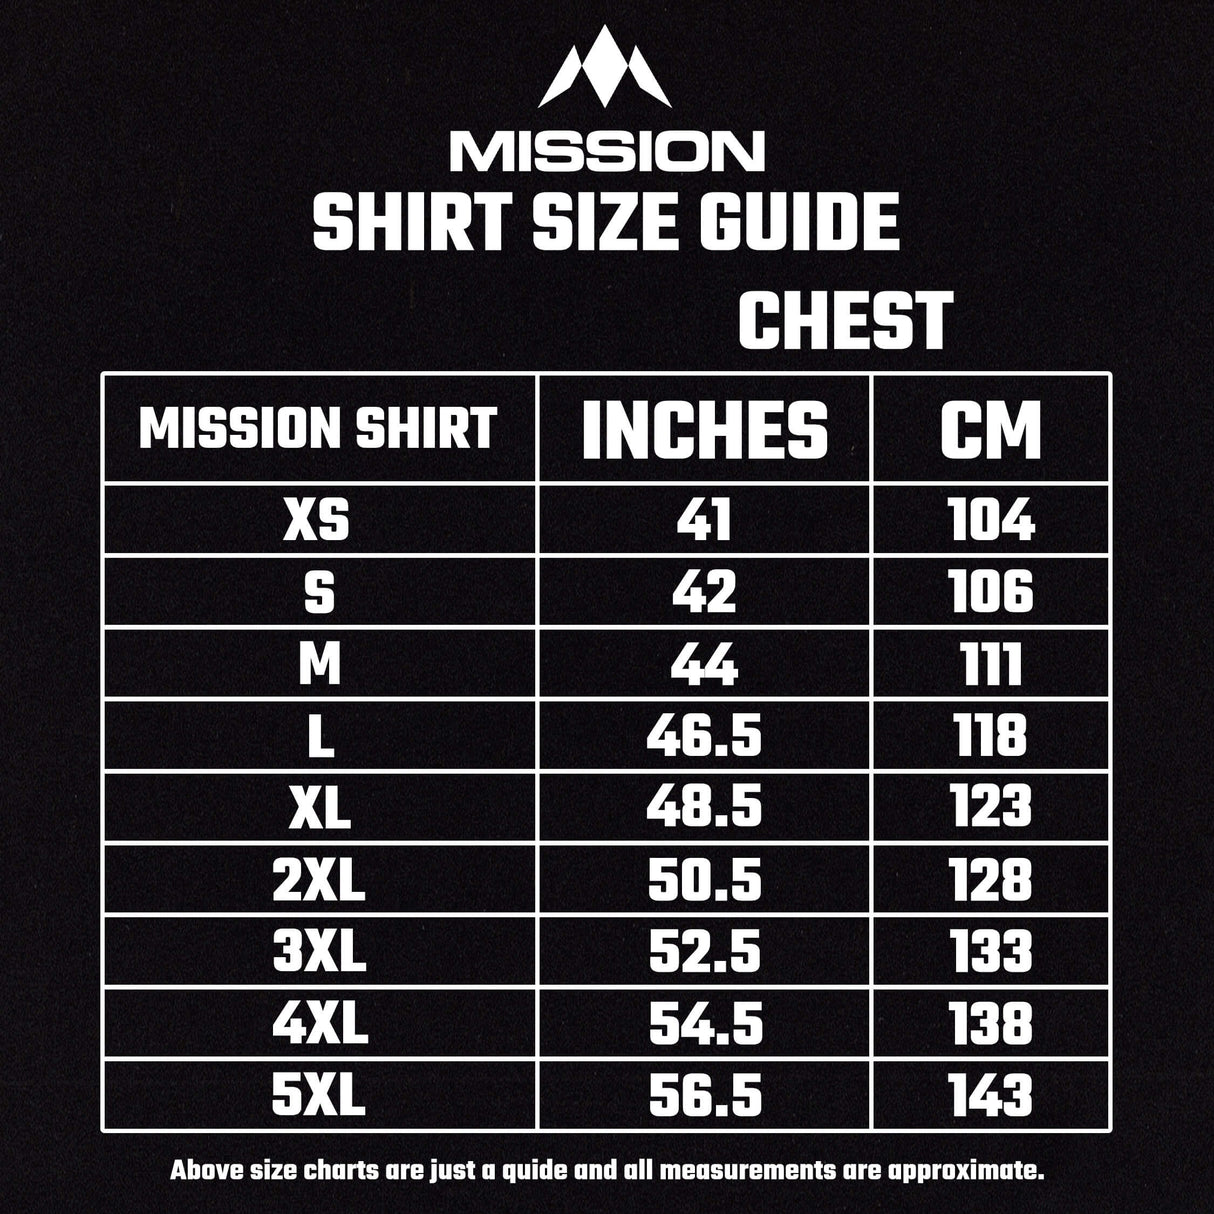 *Mission Darts EXOS Cool SL Dart Shirt - Black & Green